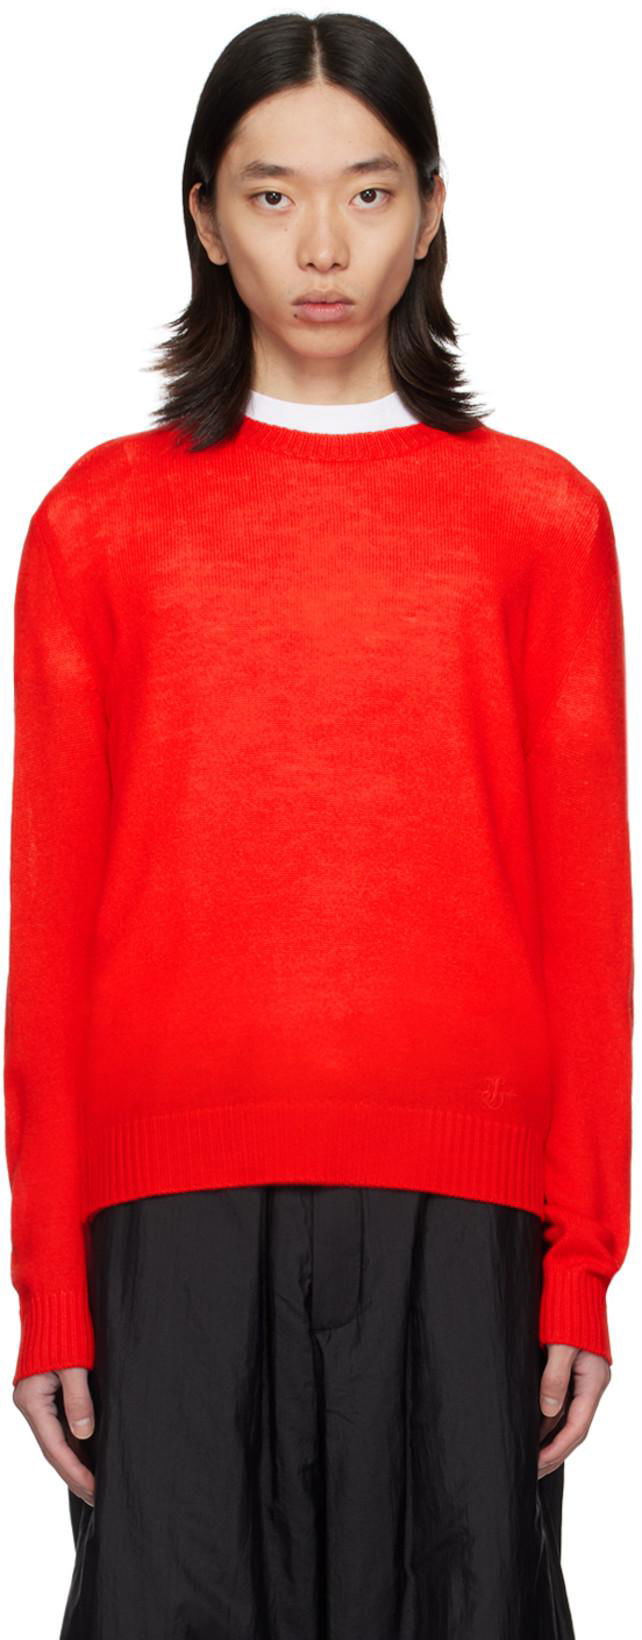 Red Crewneck Sweater by JIL SANDER